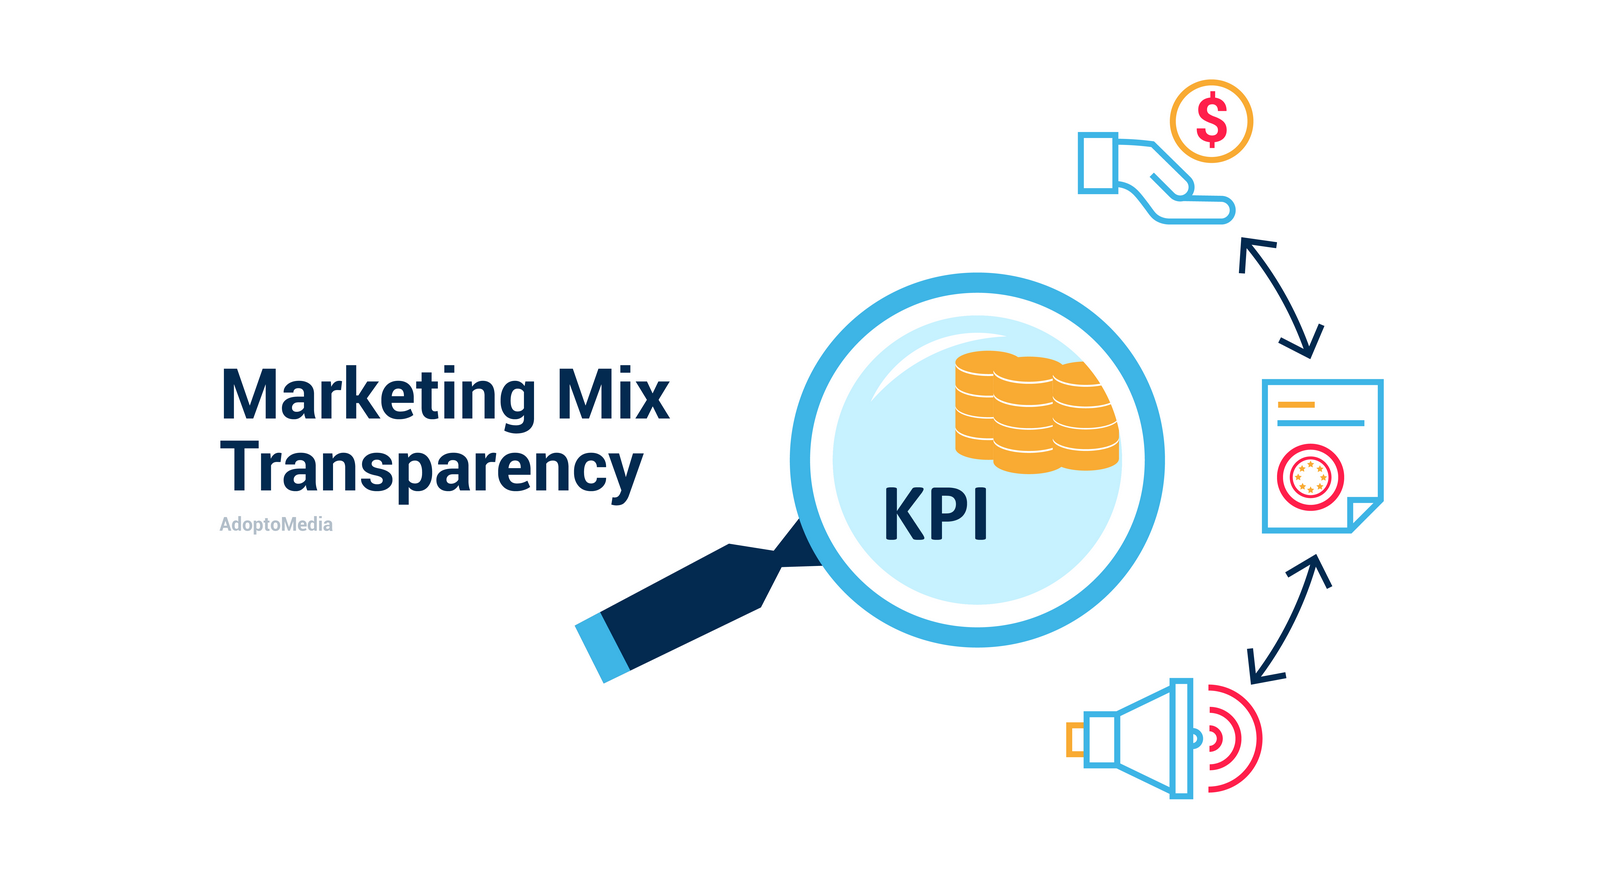 Marketing Mix Transparency, marketing, transparency, KPI, media, AdoptoMedia